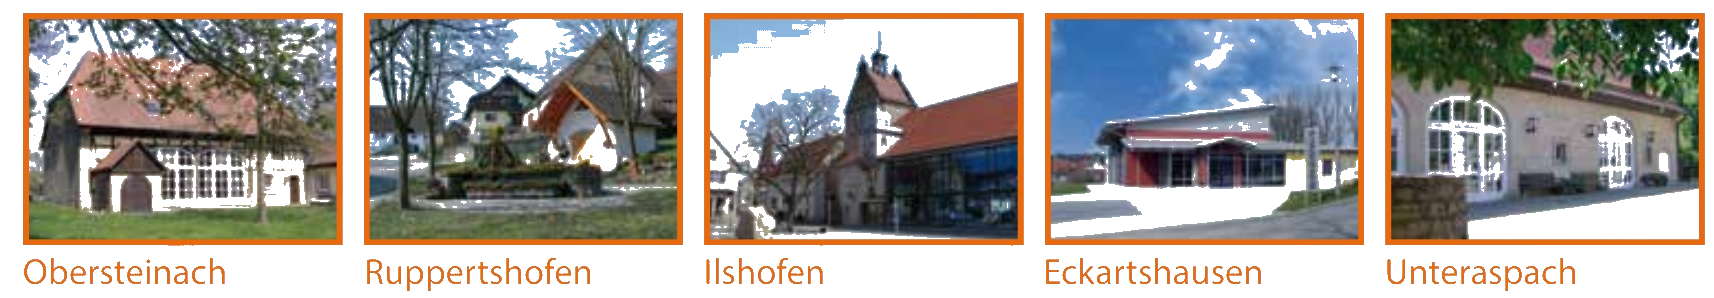 Dörfer von Ilshofen